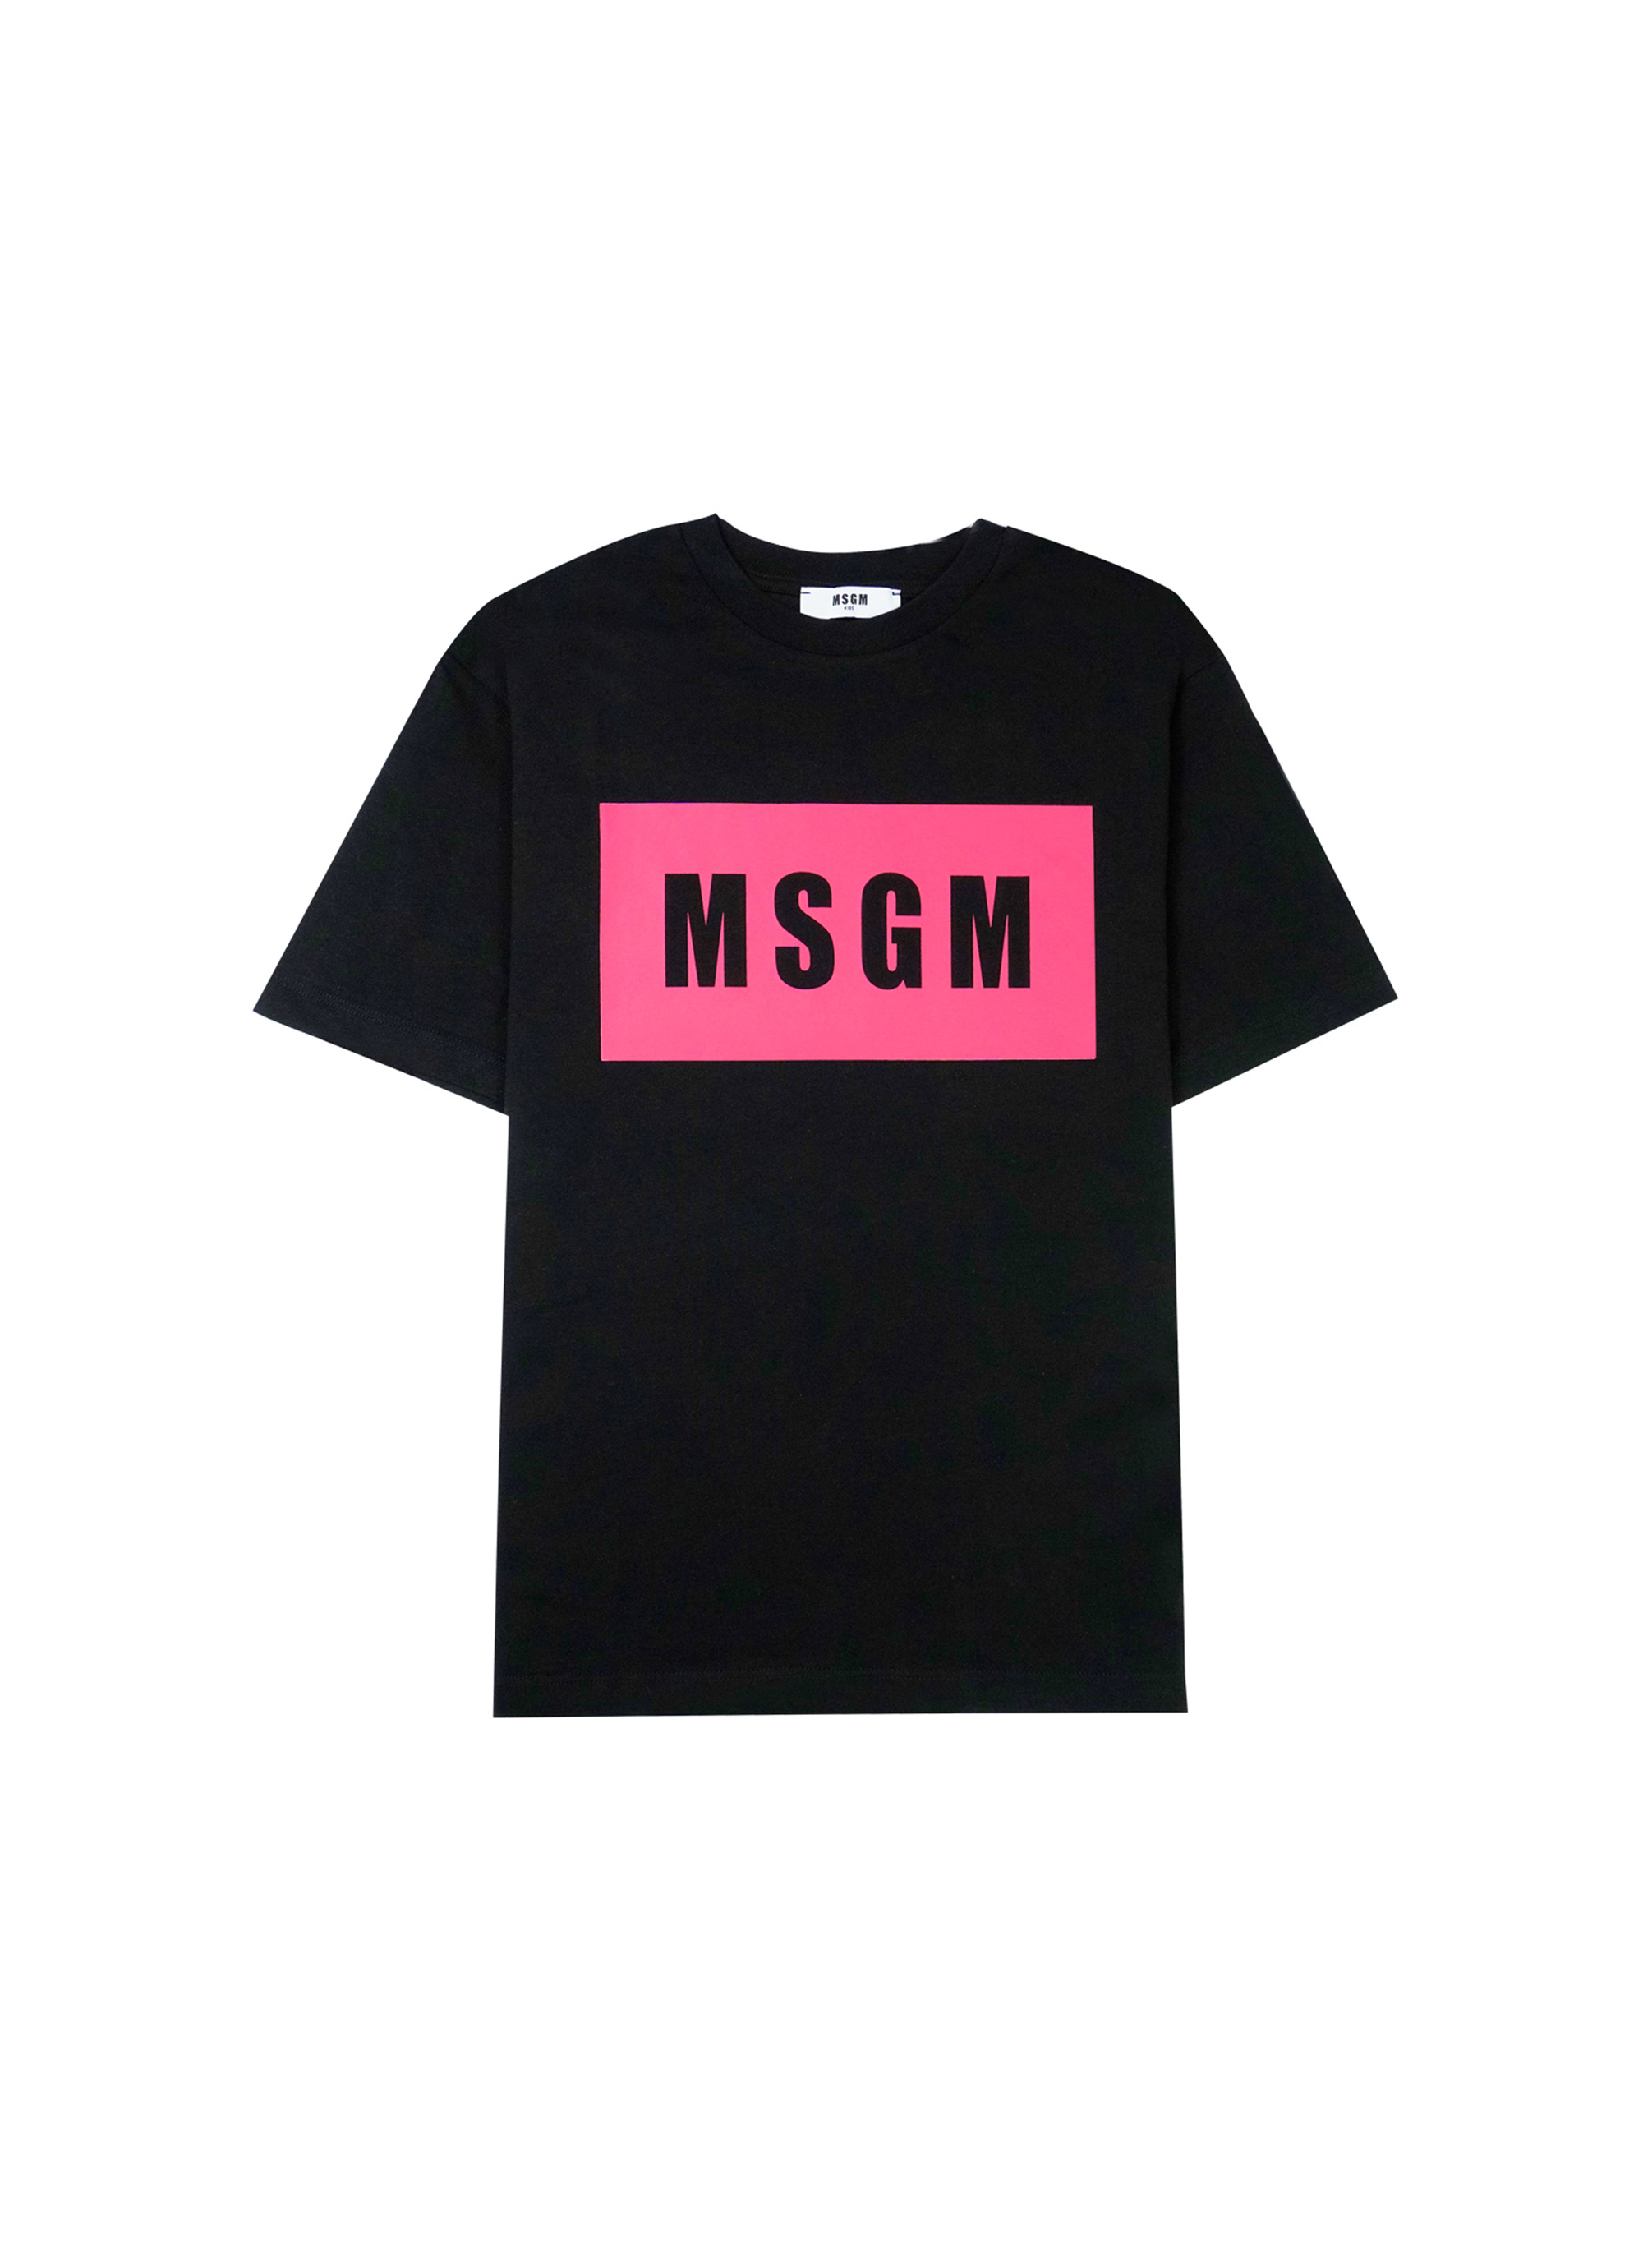 MSGM KIDS【NEW】 BOXロゴTシャツ 詳細画像 ブラック×フューシャピンク 1